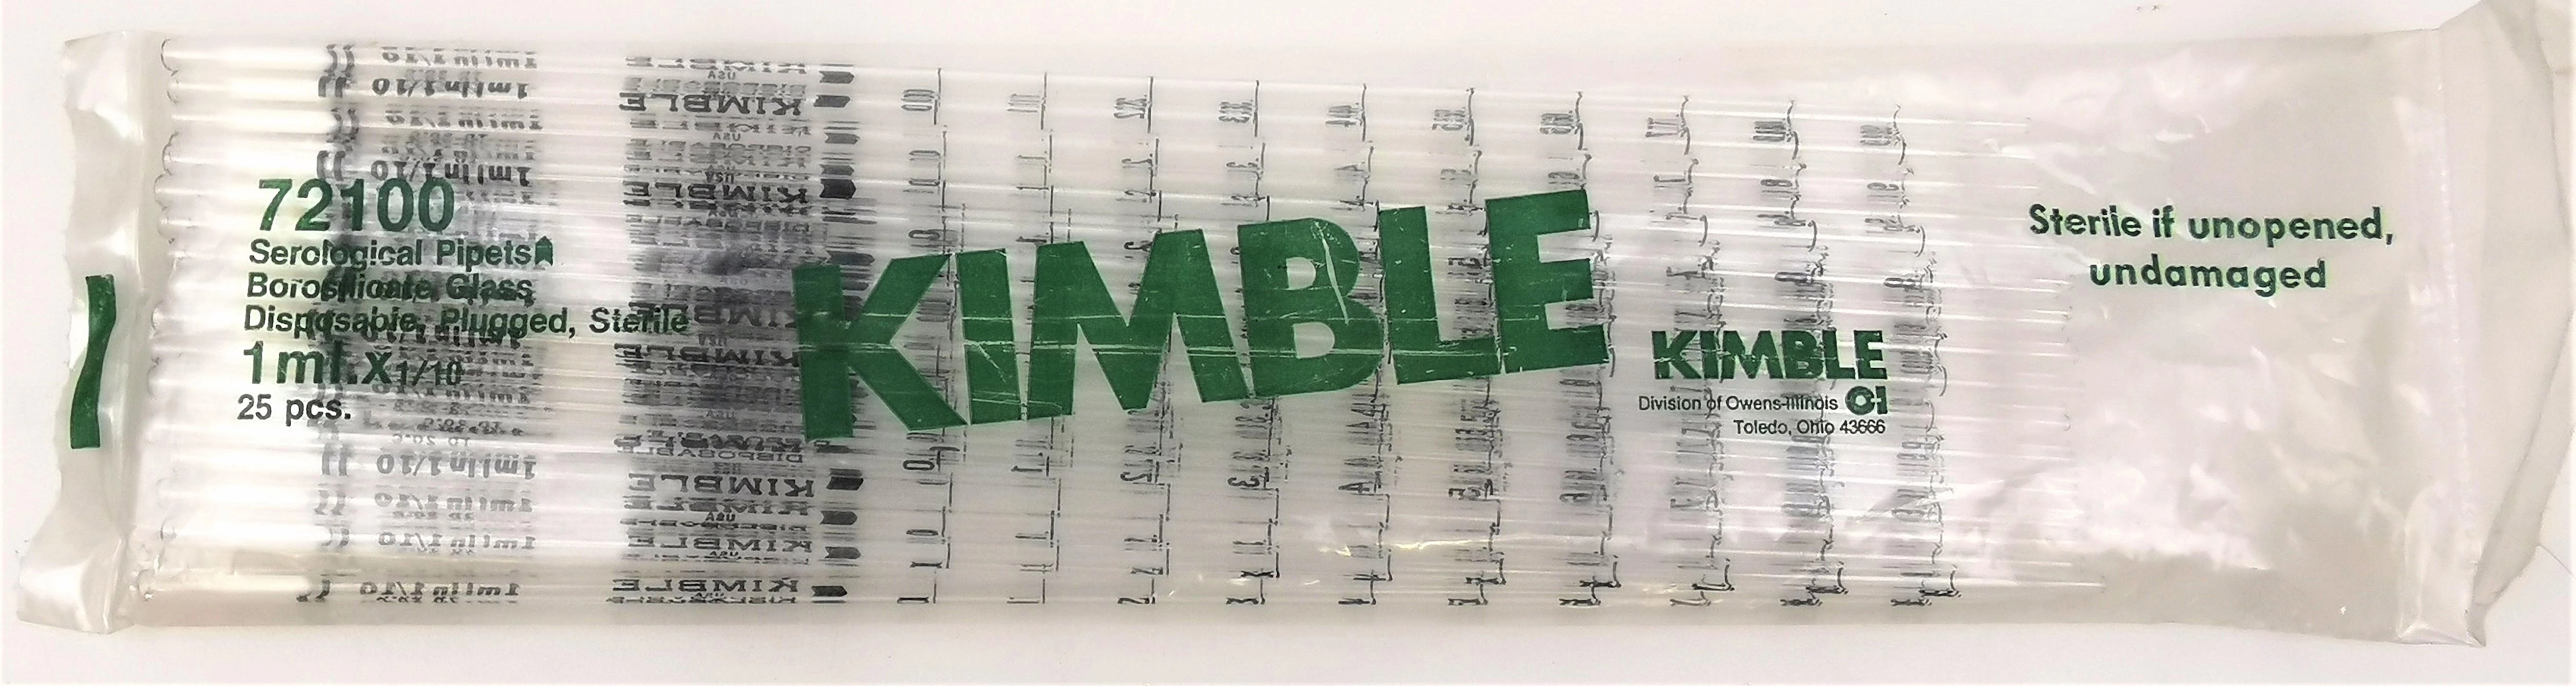 Kimble 72100-1110 KIMAX Disposable Serological Pipet - 1mL in 1/10 (25 Pk)